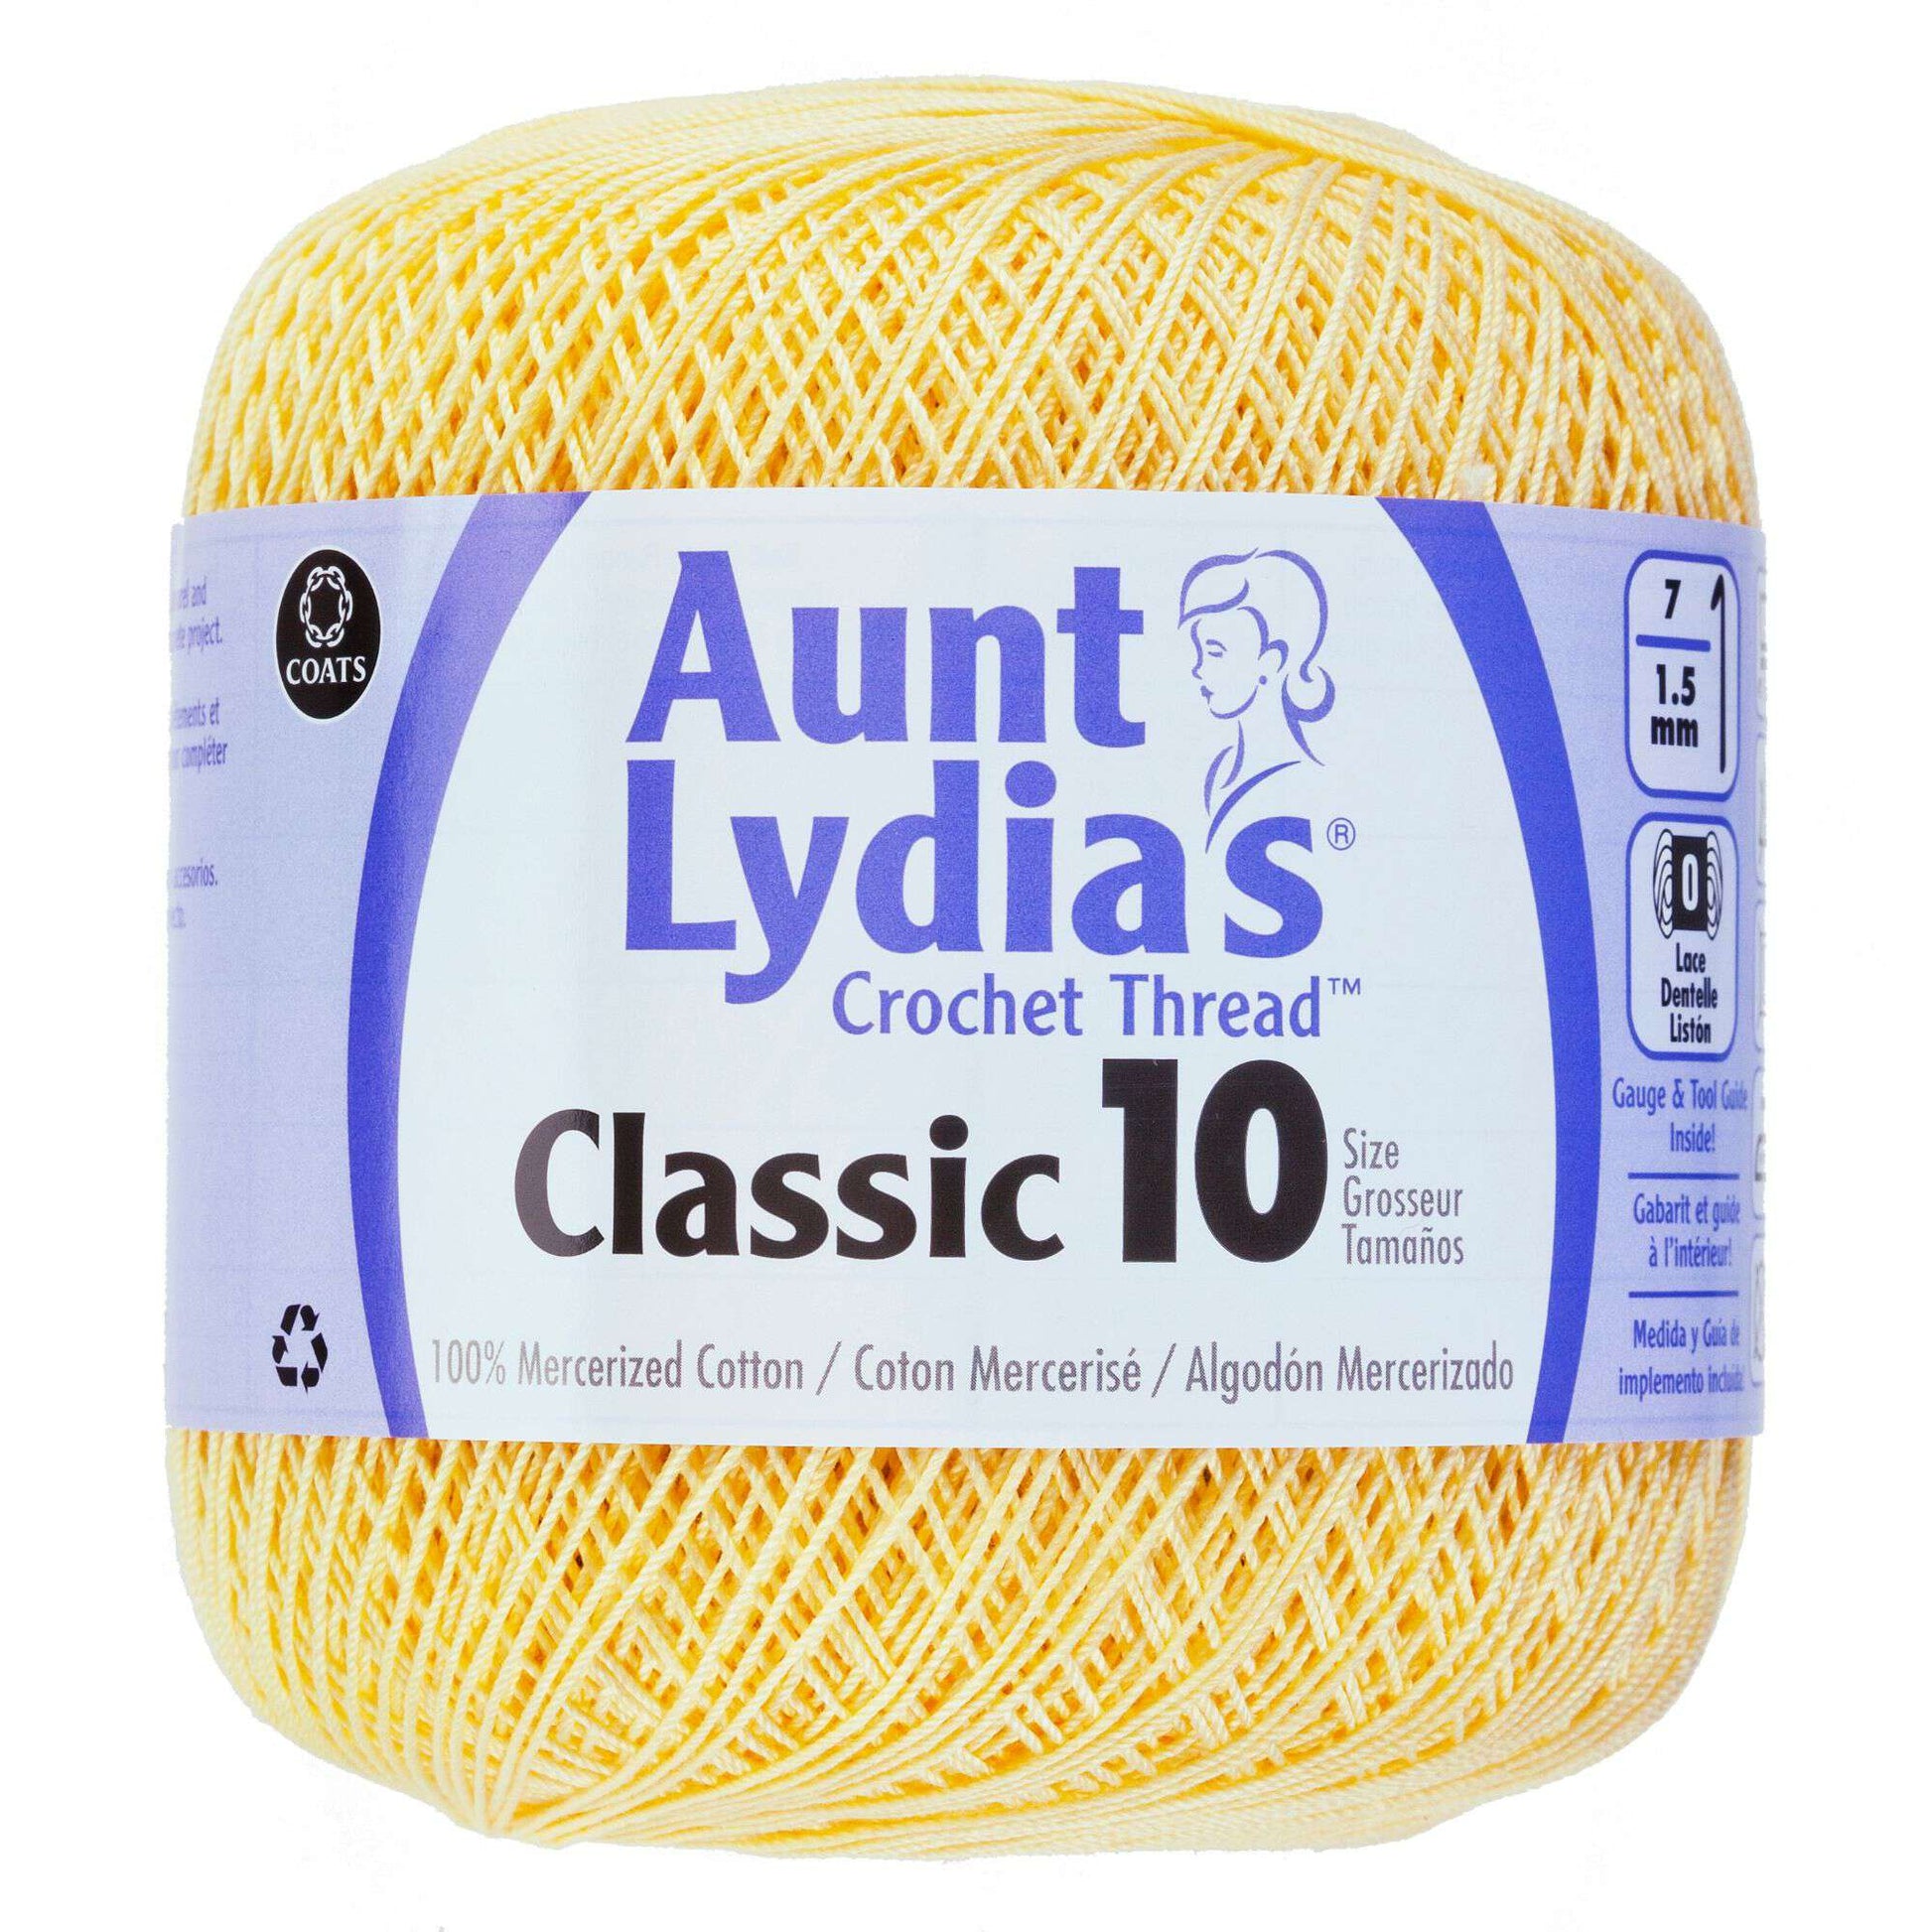 Aunt Lydia's® Classic Crochet Thread Size 10 - #15499